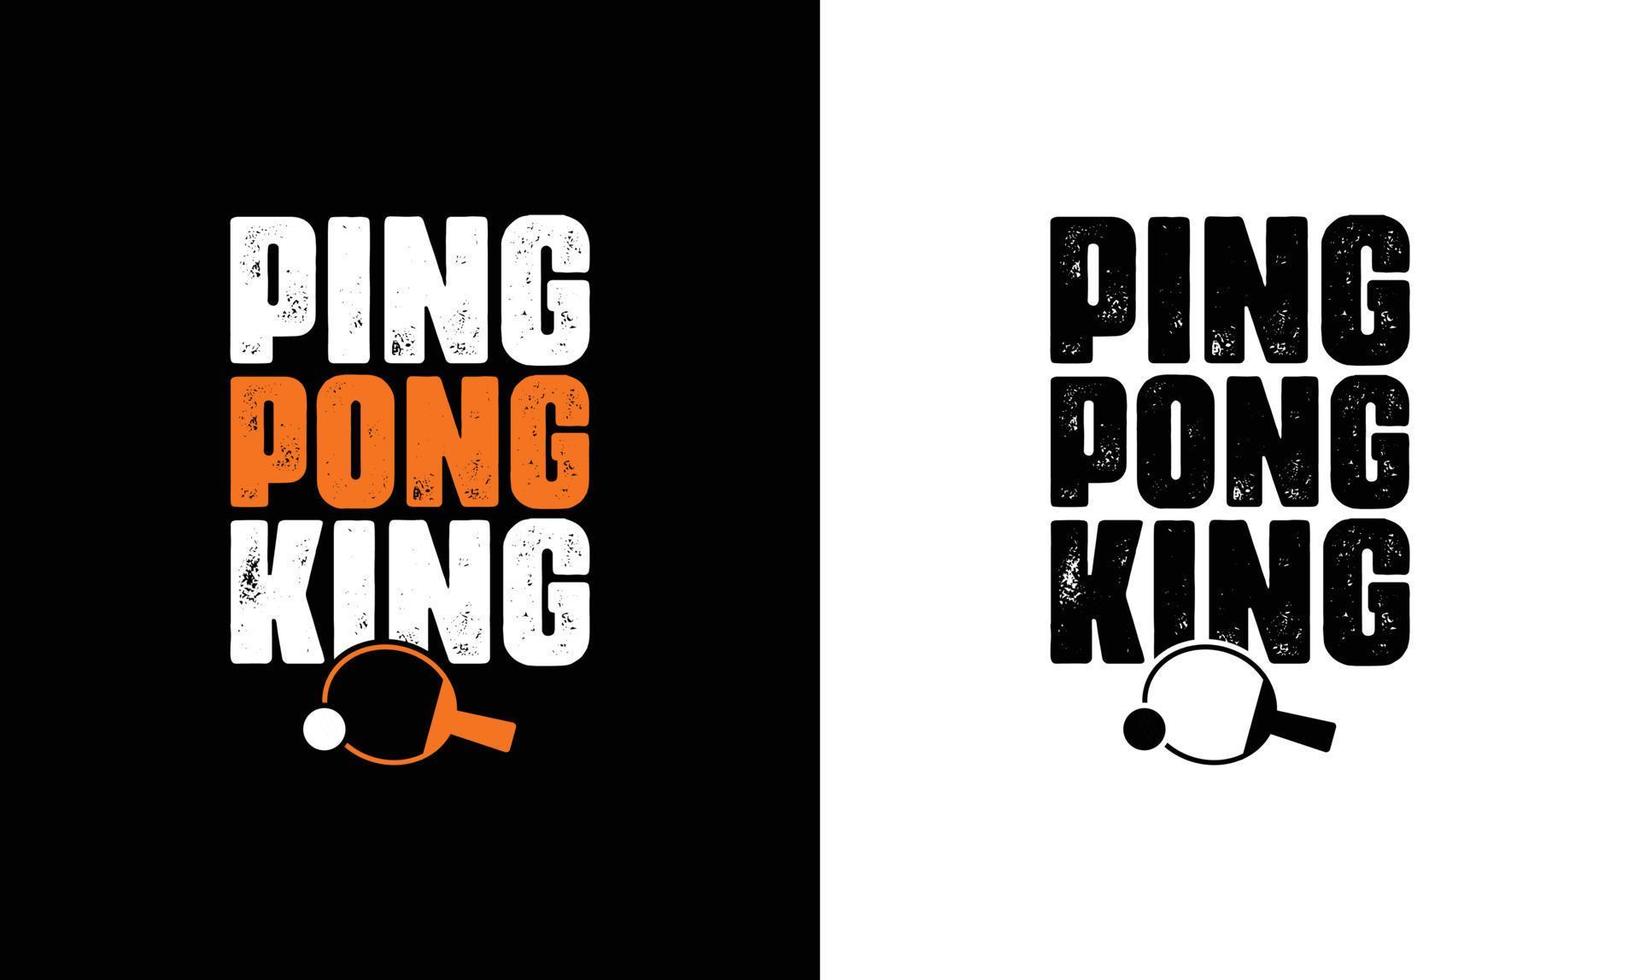 ping pong tabell tennis Citat t skjorta design, typografi vektor